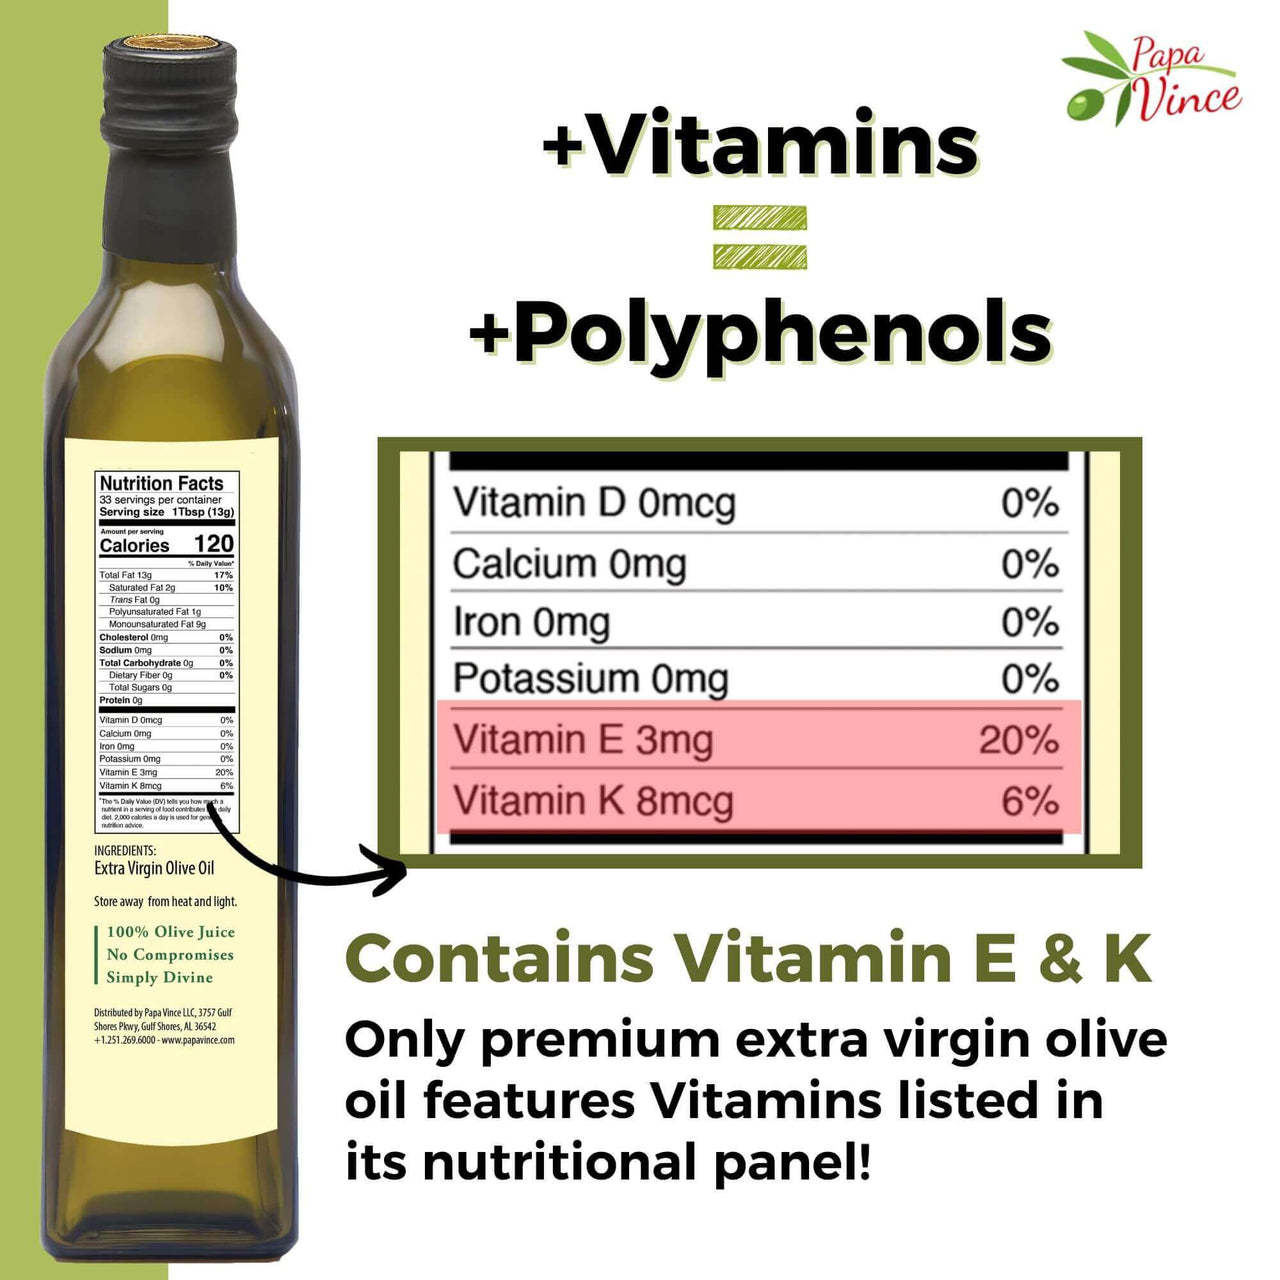 Premium Quality Polyphenol Rich Extra Virgin Olive Oil that contains Vitamin E (20% DV) and Vitamin K (6% DV)